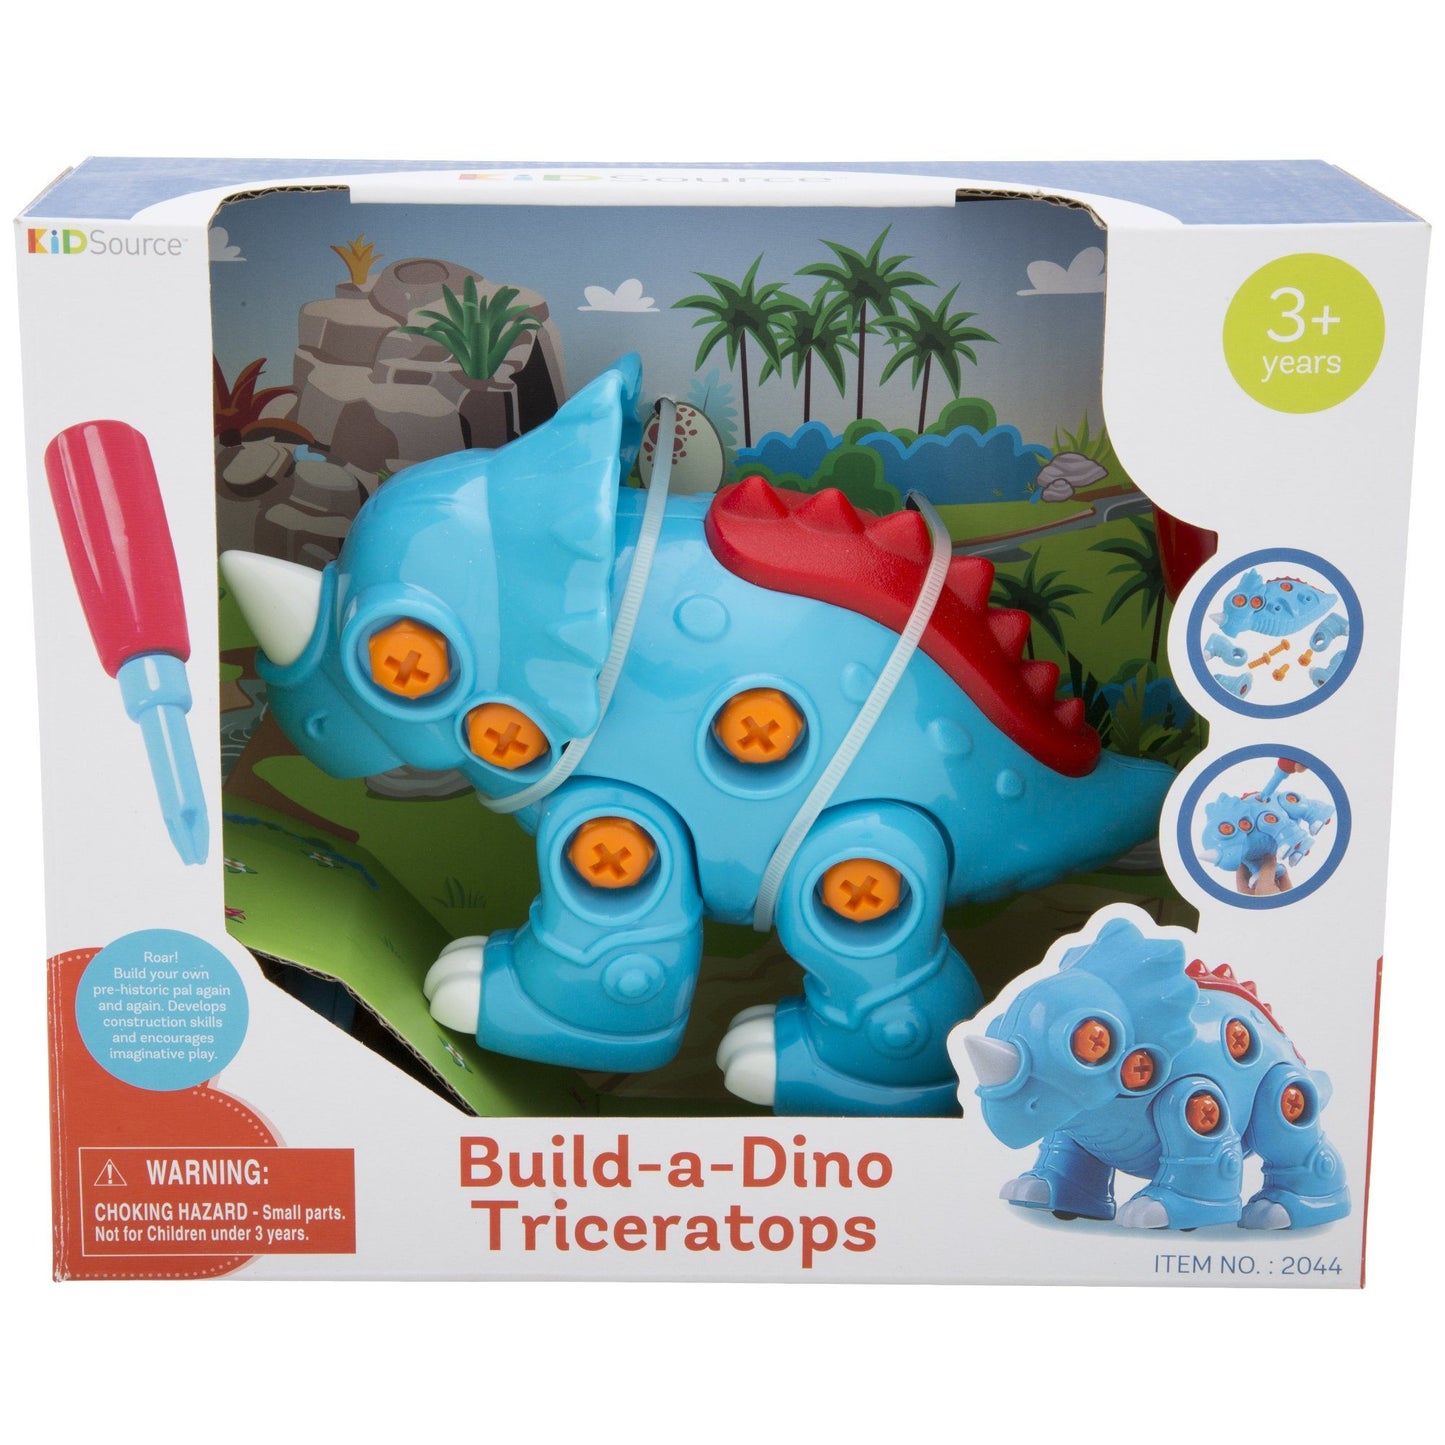 Build-a-Dino